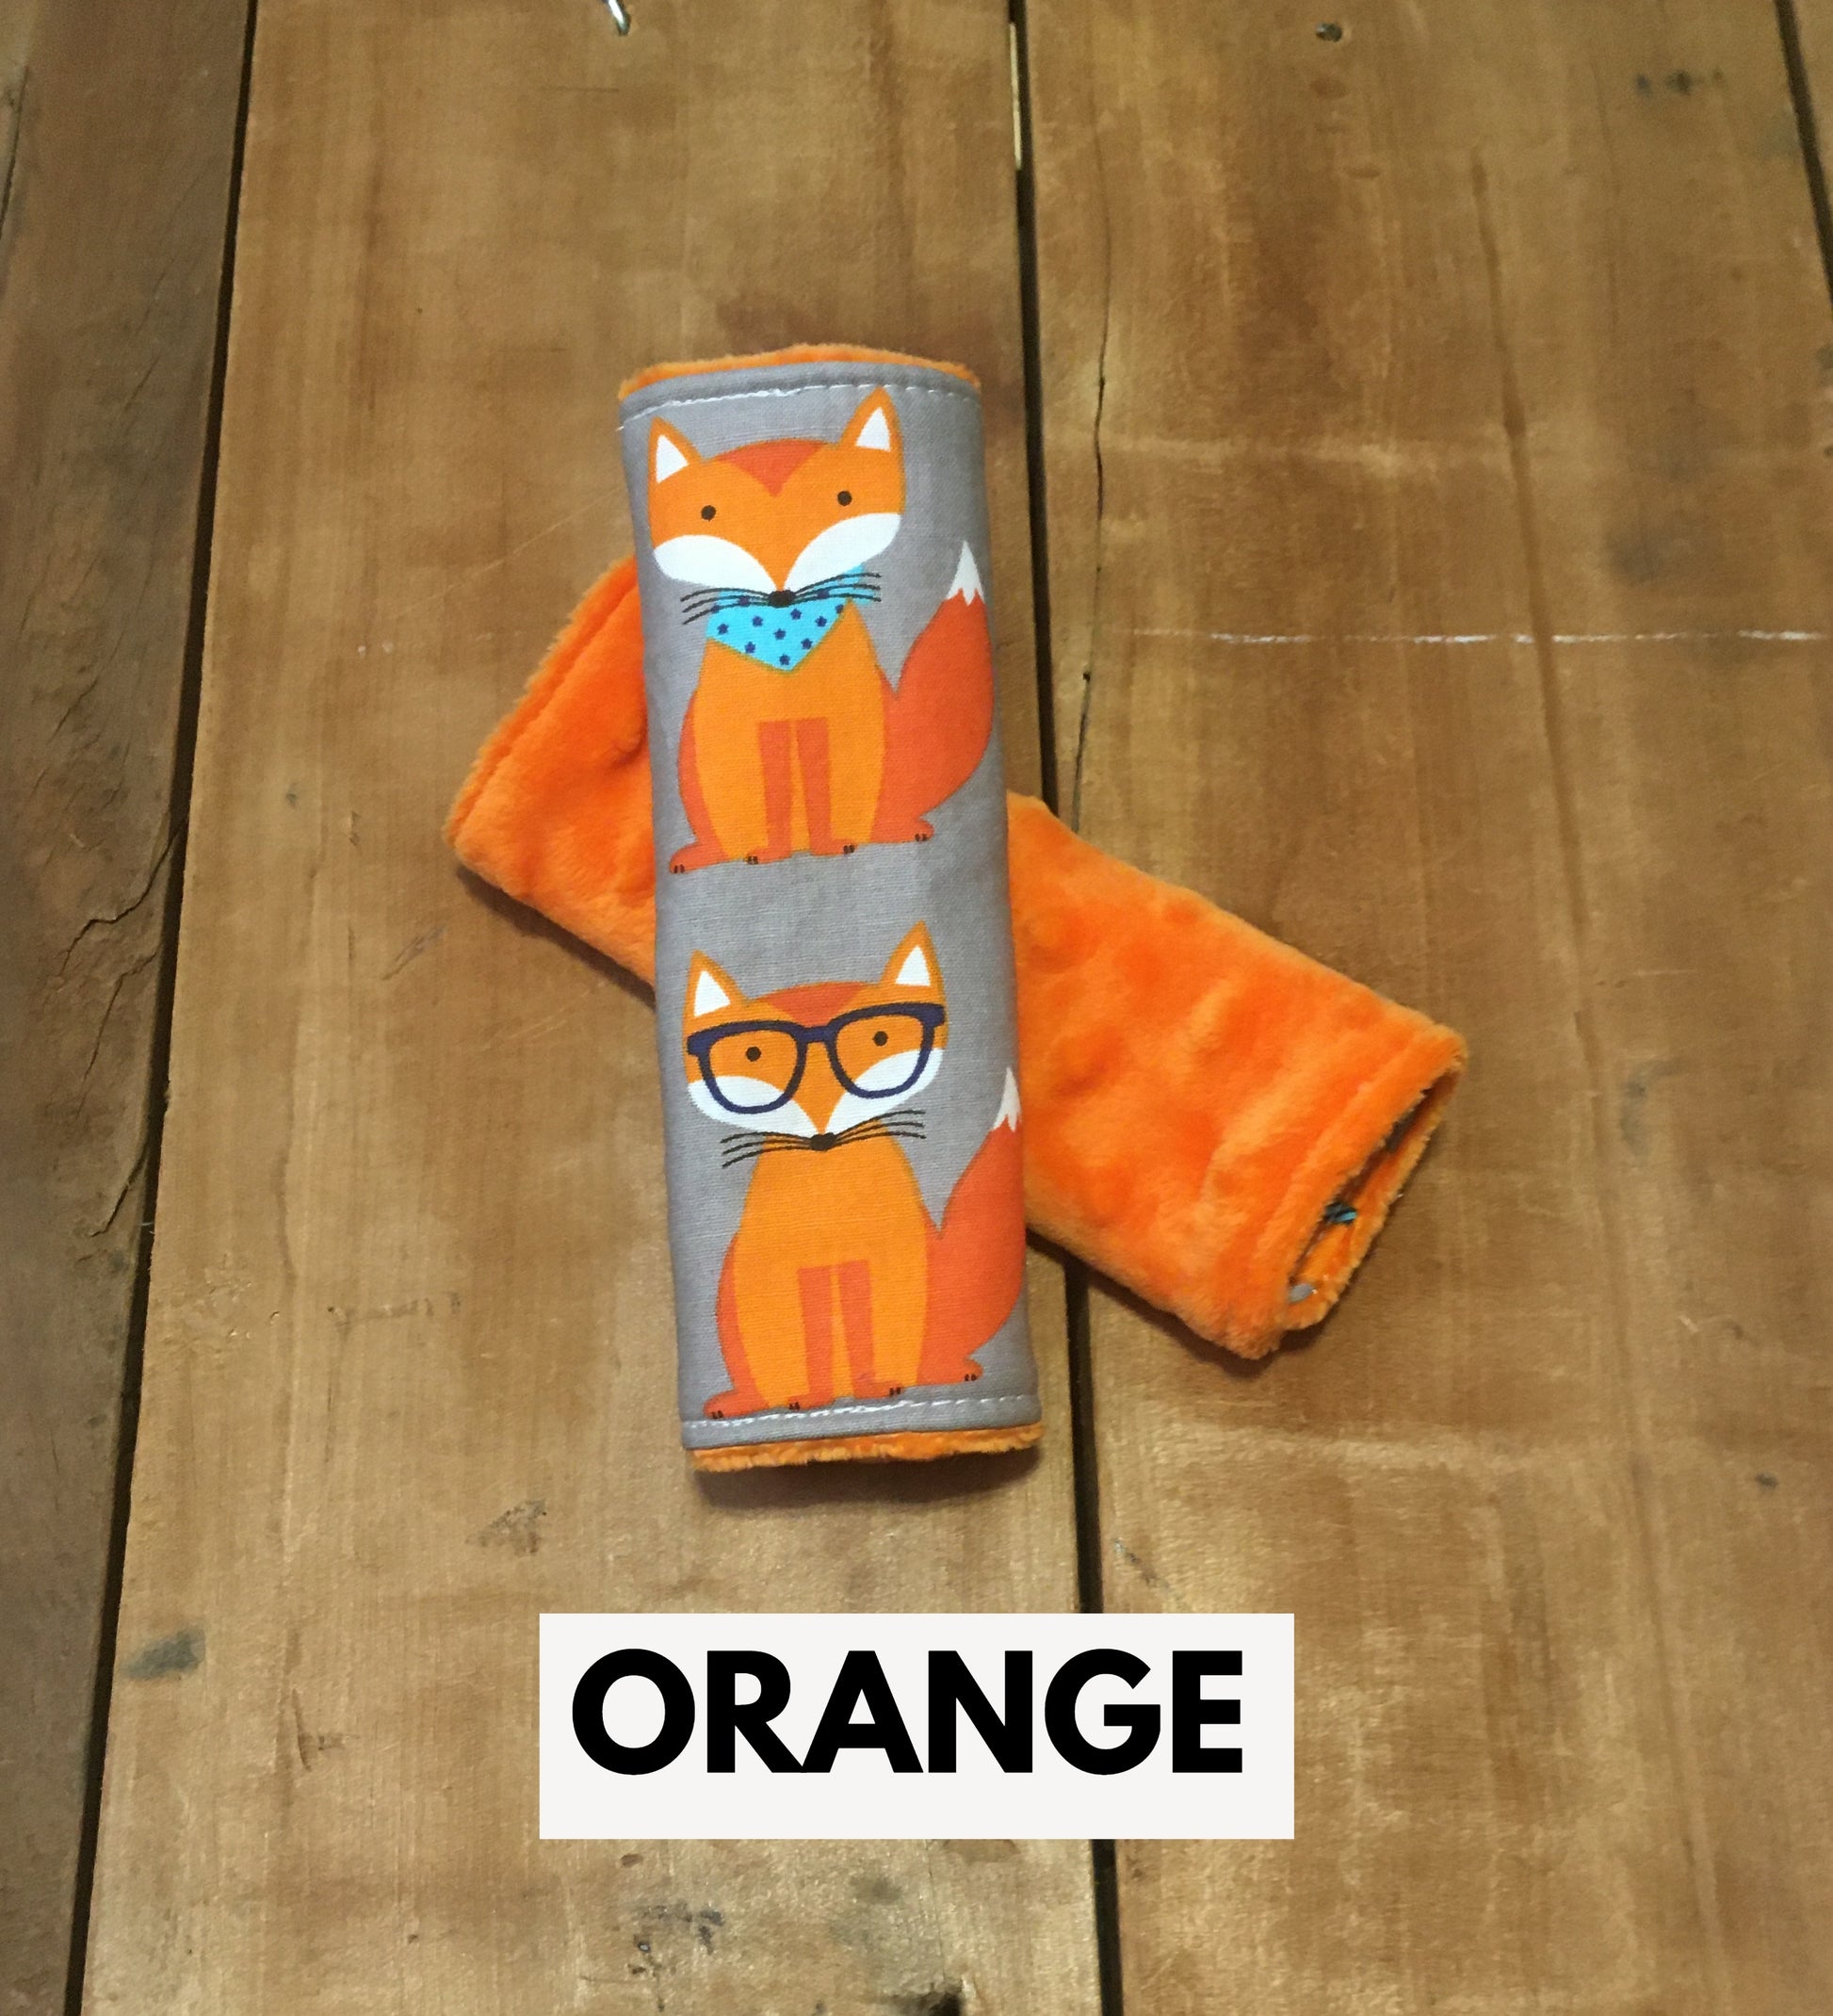 orange nerdy fox car seat strap covers shown in size 5"-6" shown in orange minky